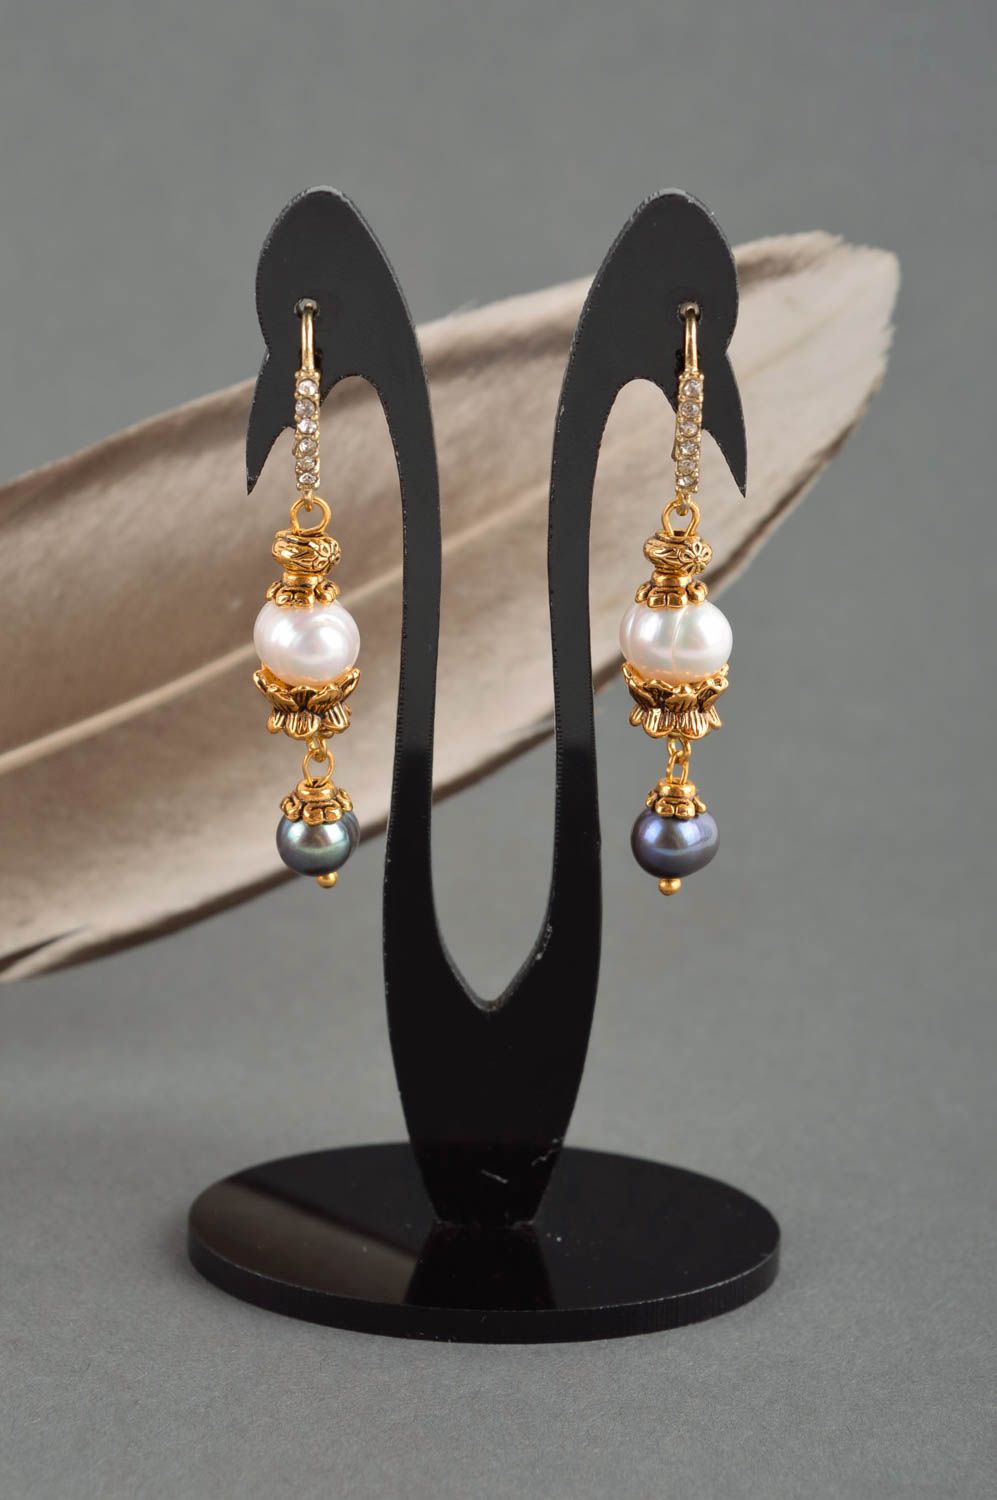 Handmade earrings long earrings fashion jewelry designer accessories gift ideas photo 1